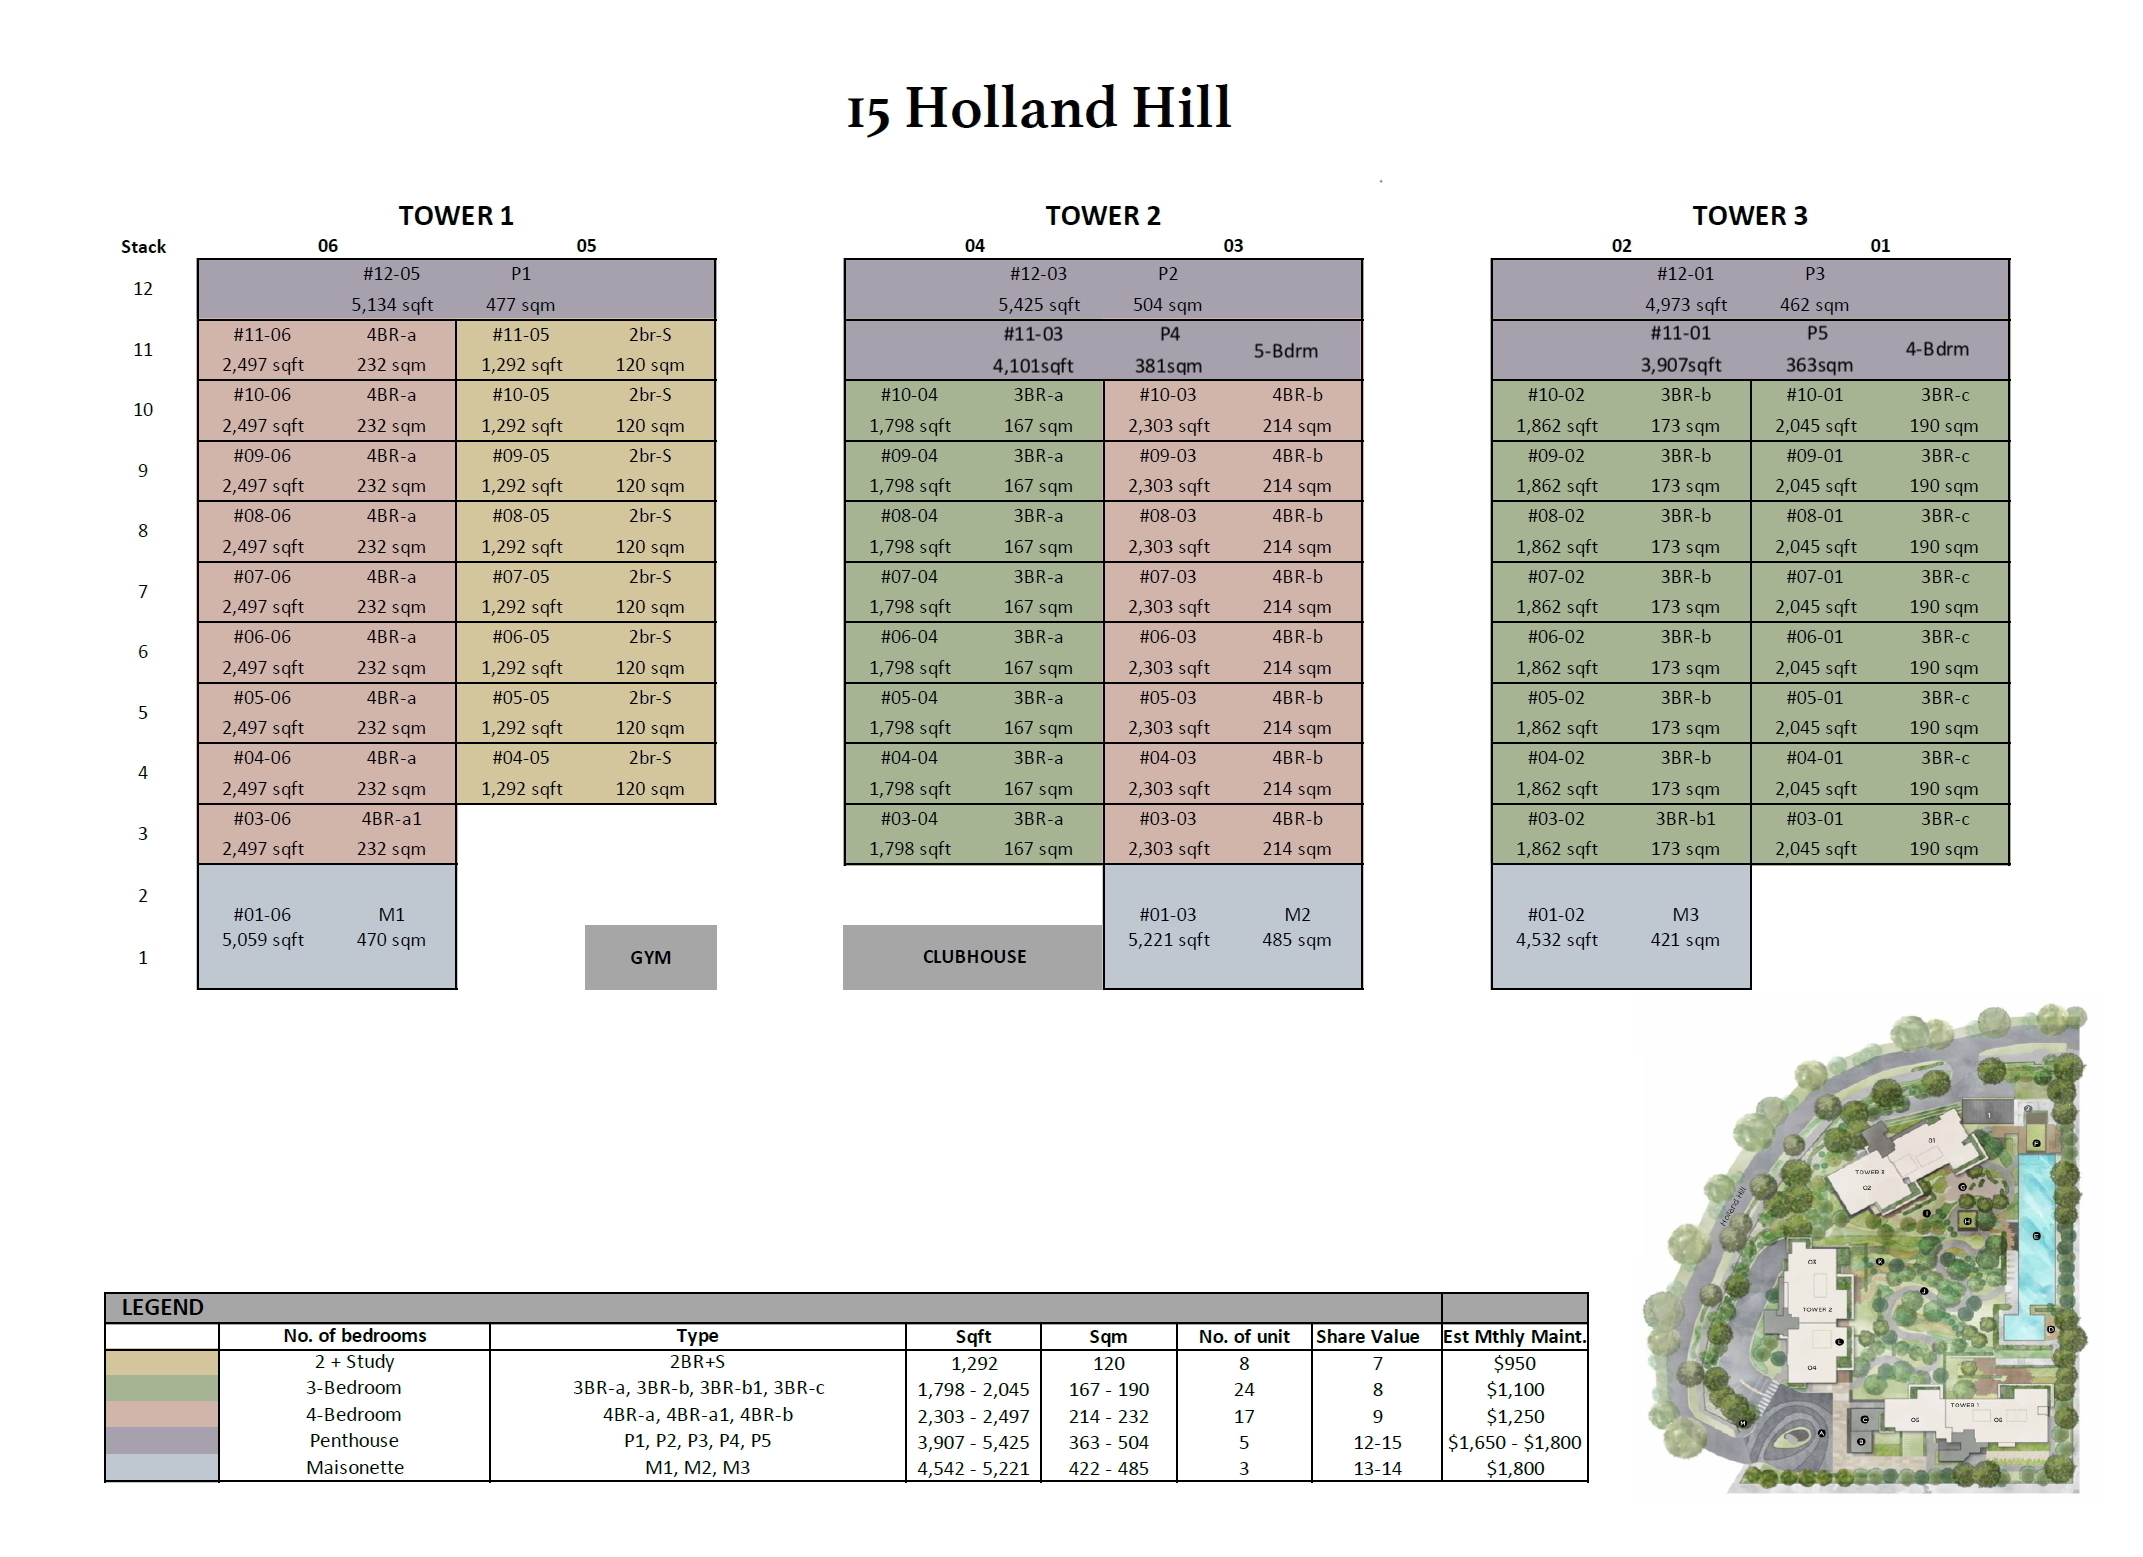 15 Holland Hill site plan